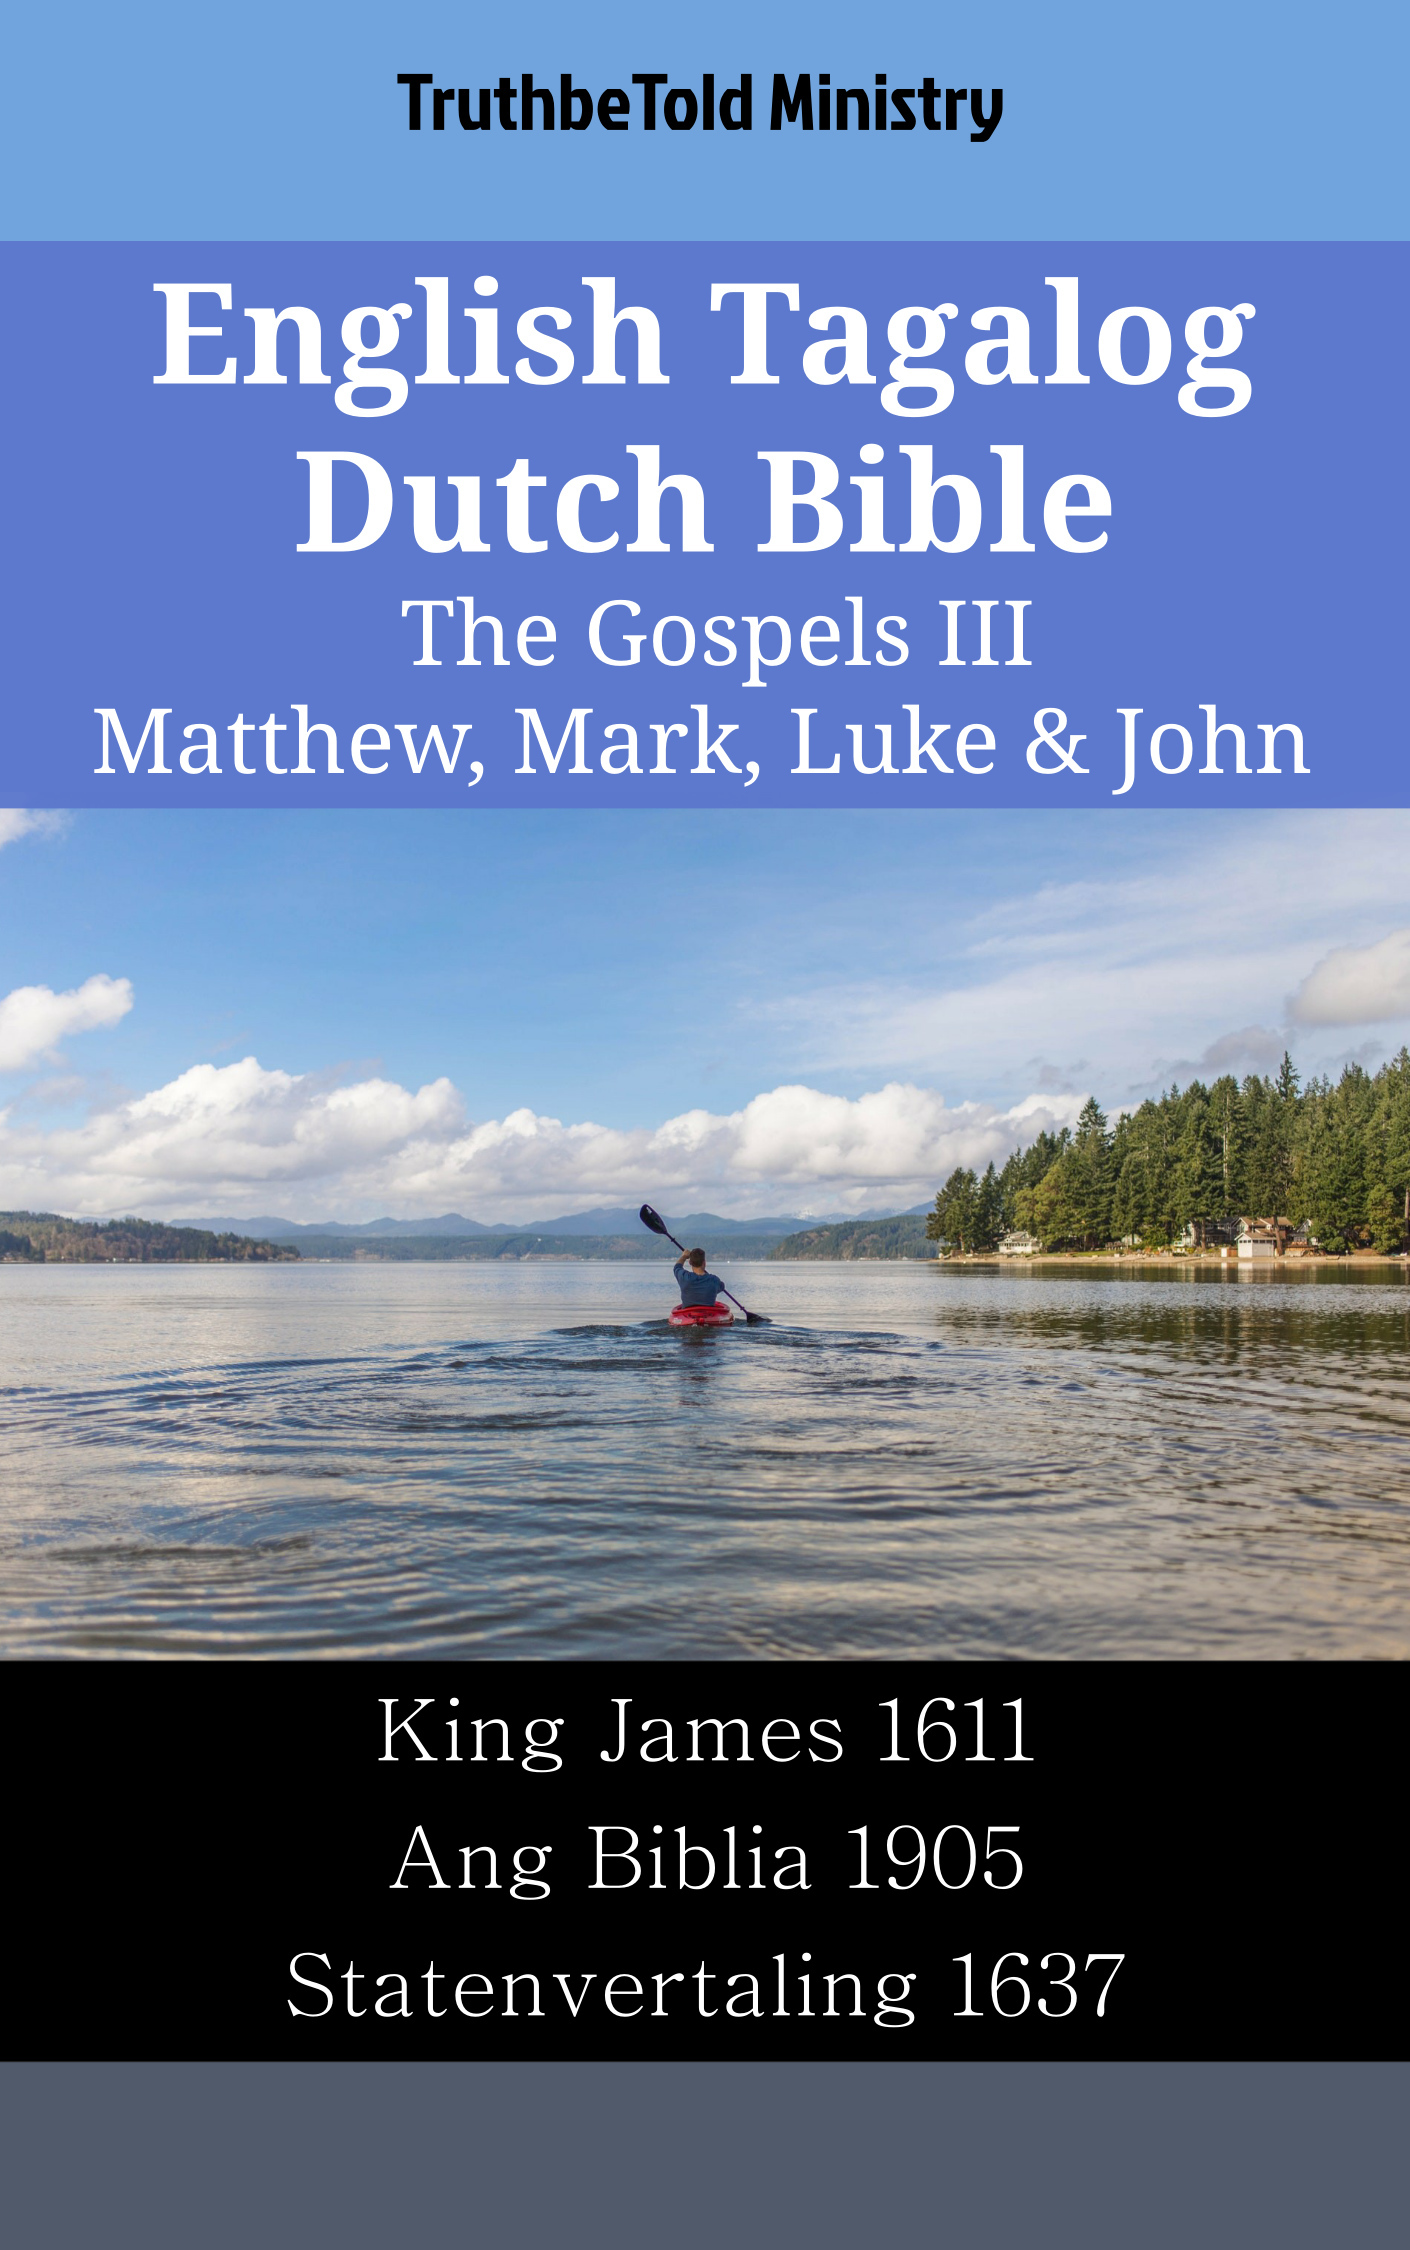 English Tagalog Dutch Bible - The Gospels III - Matthew, Mark, Luke & John